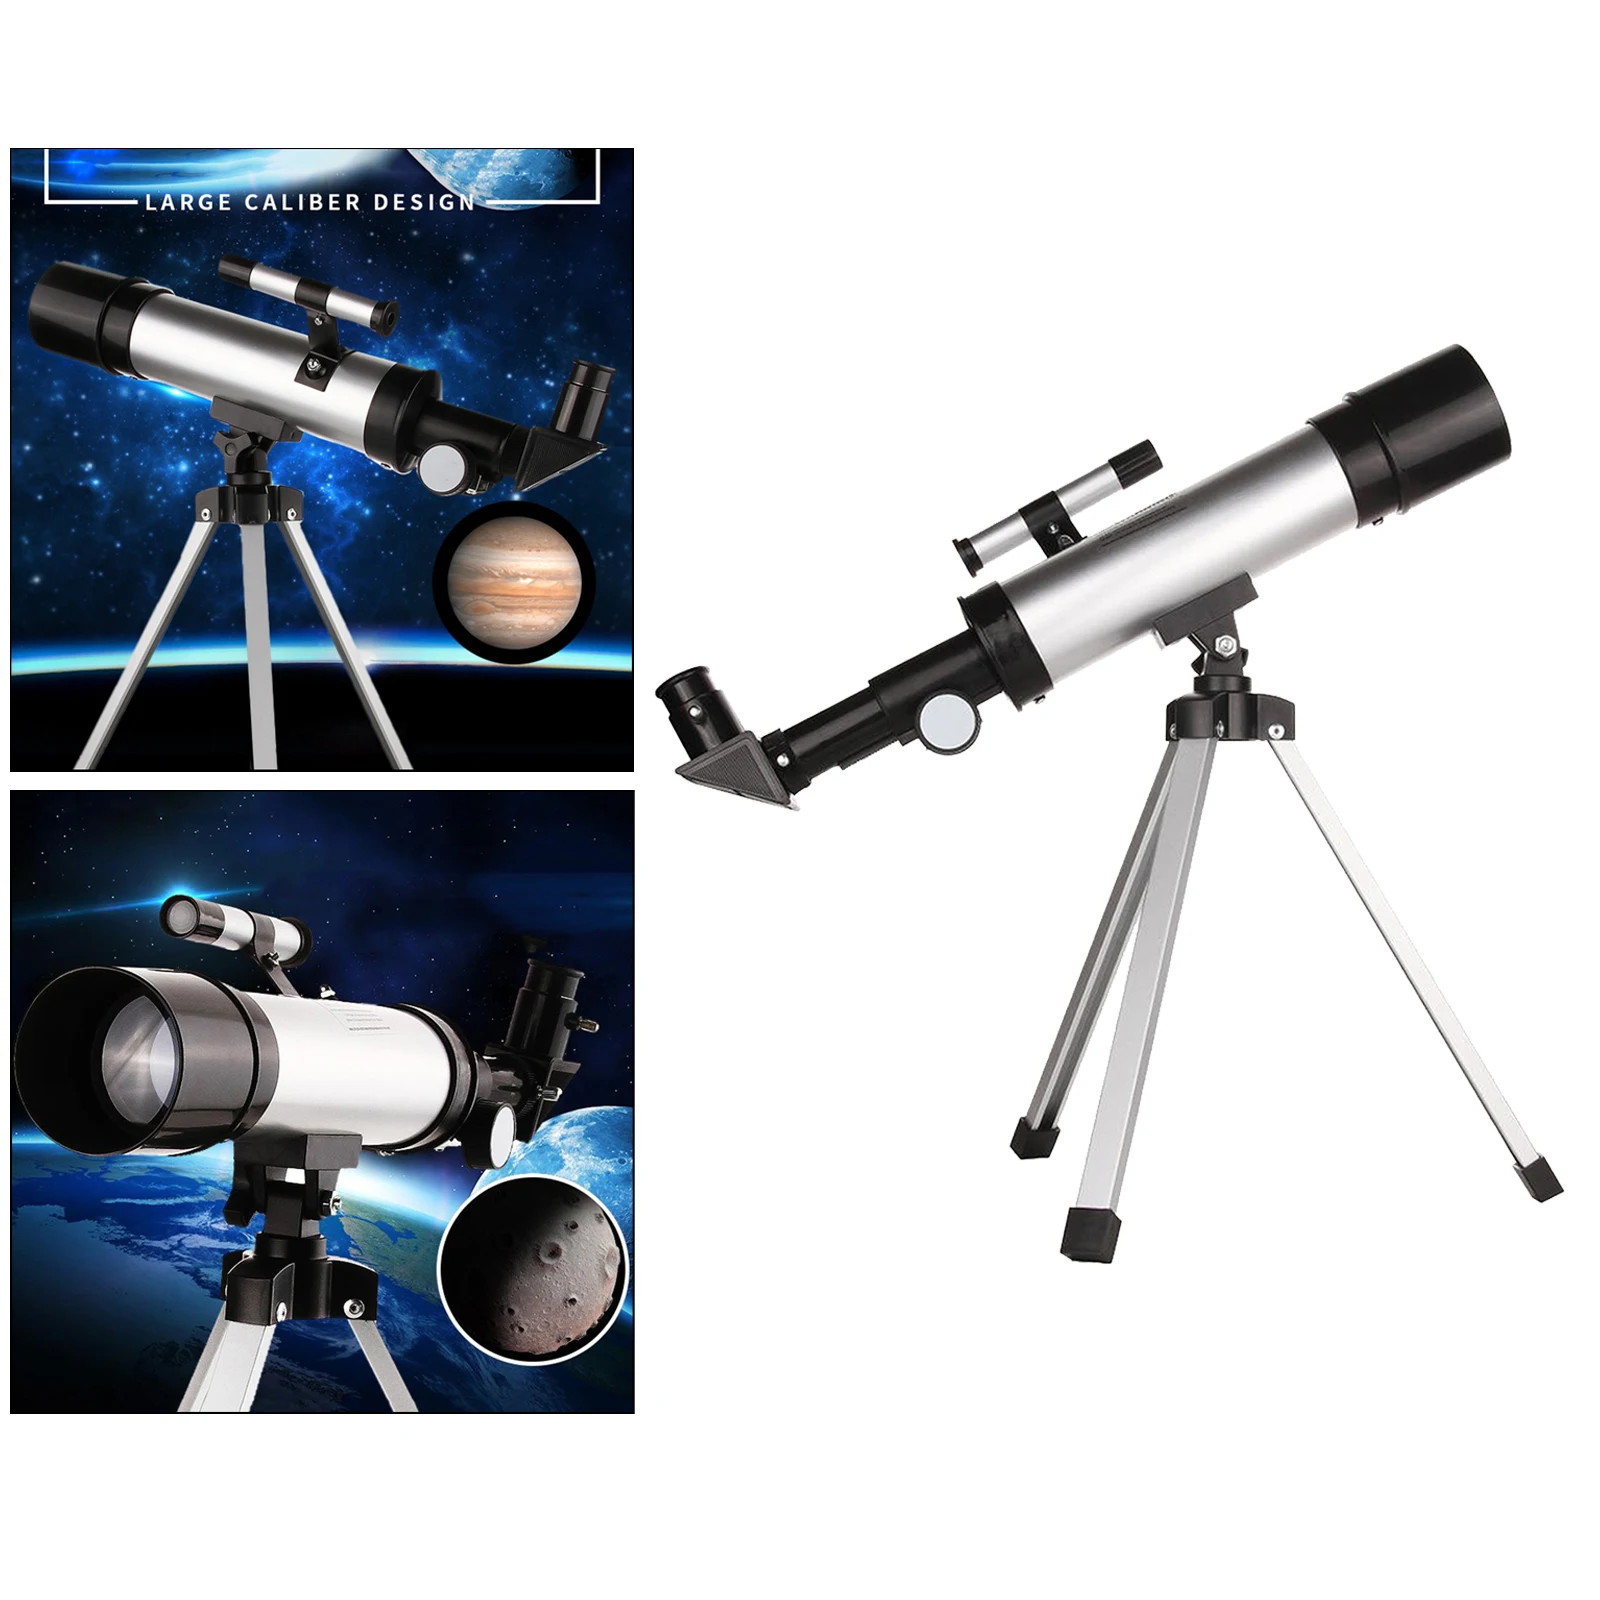 F36050 Zoom 90X Astronomical Reflector Telescope Set w/ Tripod Finder Scope